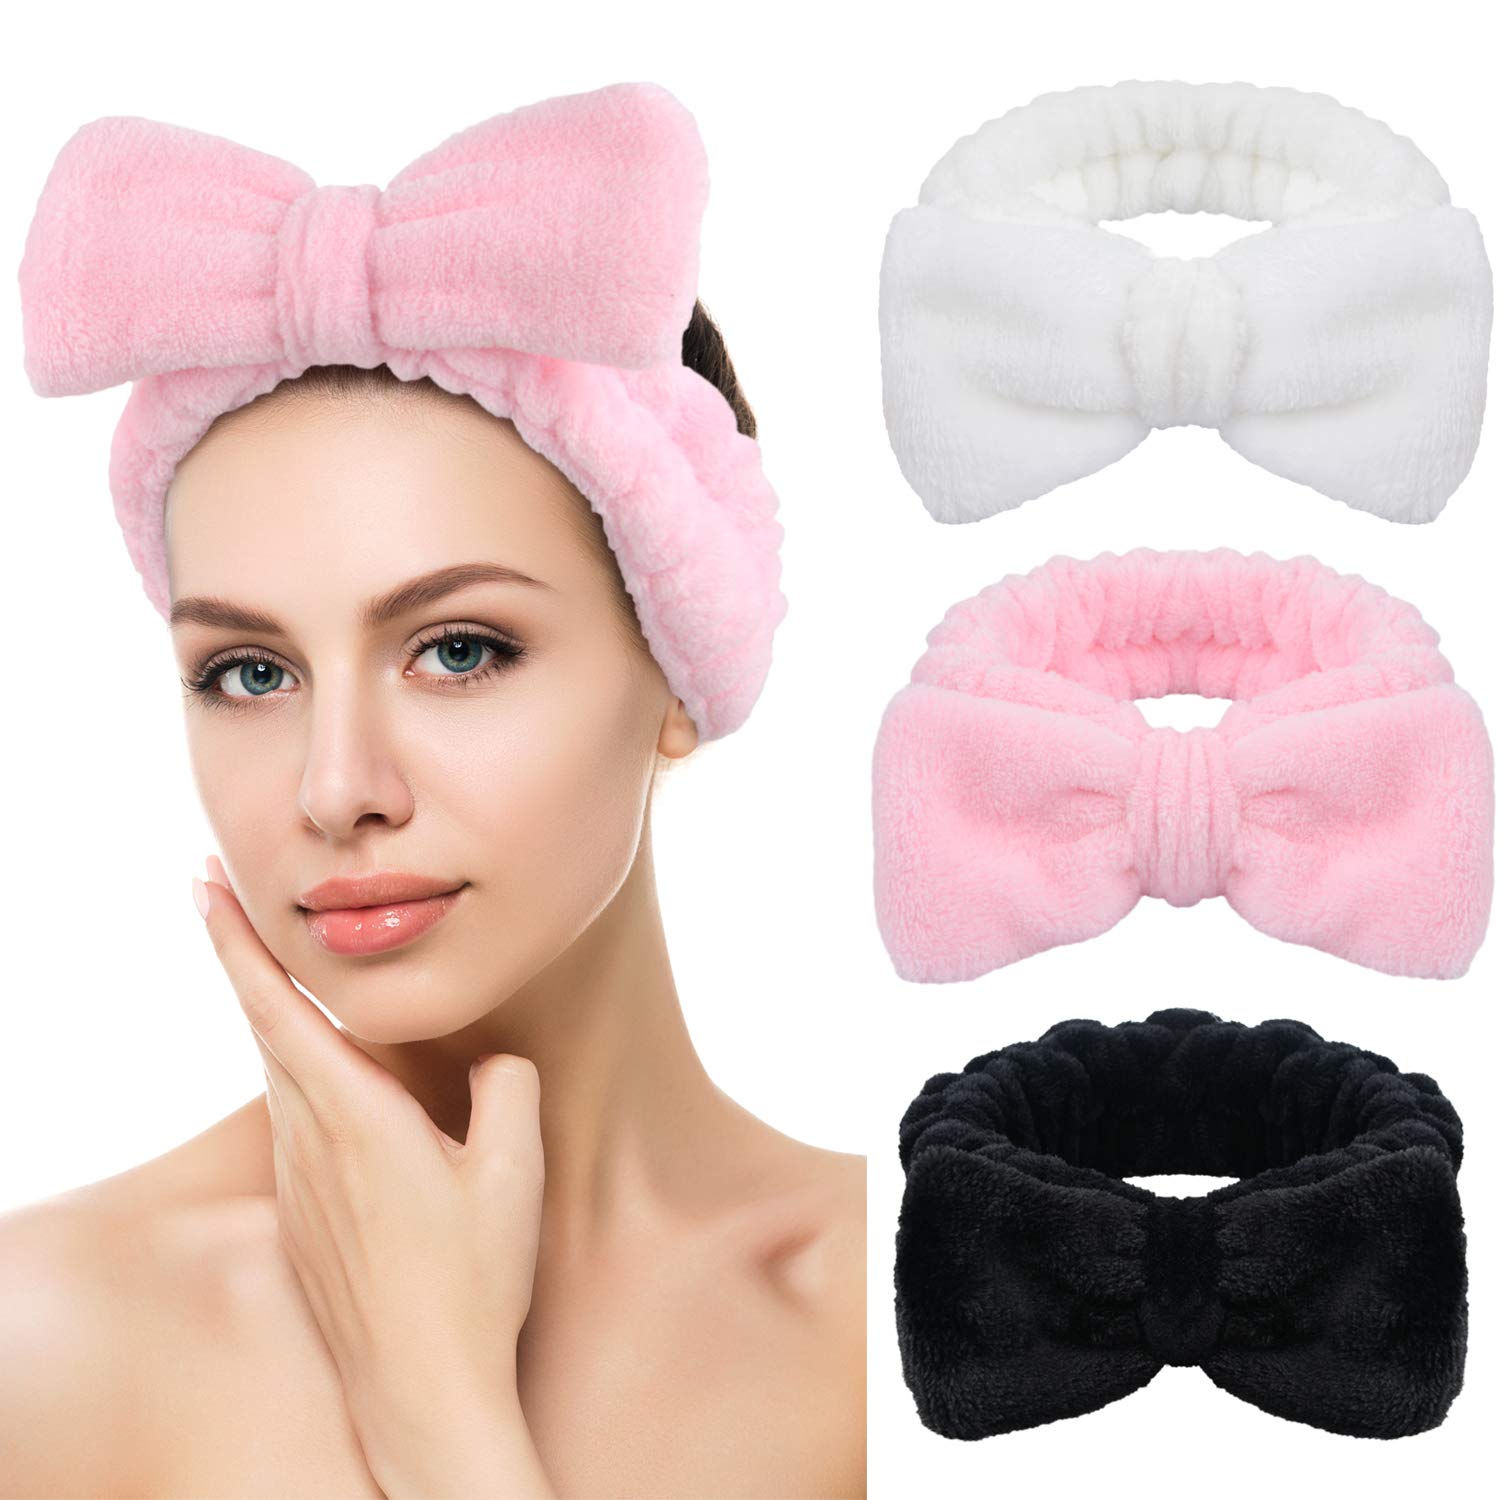 SINLAND Cute Hair Bands Spa Headband for Washing Face Makeup